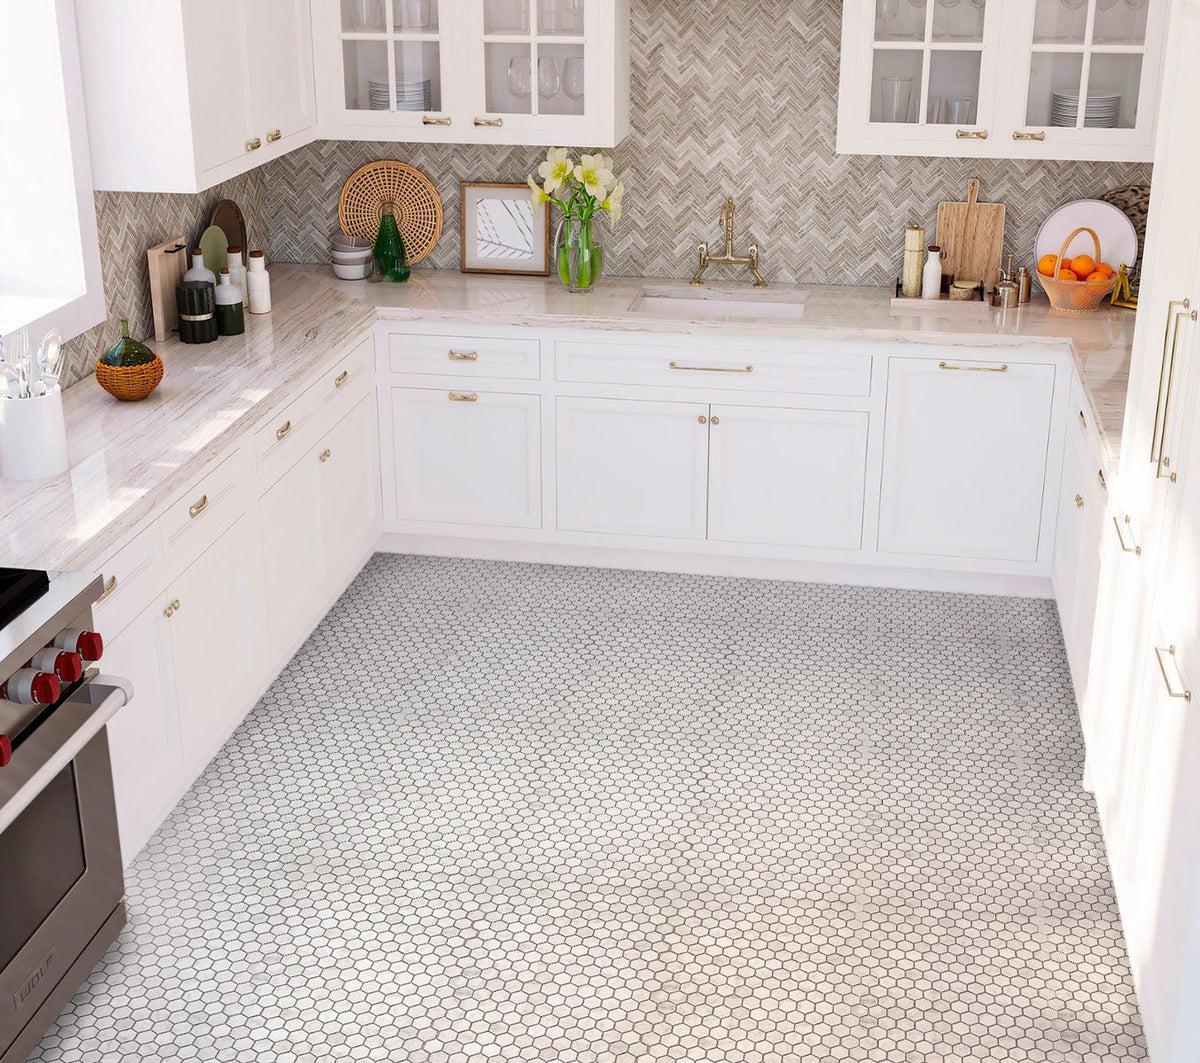 1 Inch White Carrara Hexagon Marble Mosaic Tile kitchen floor